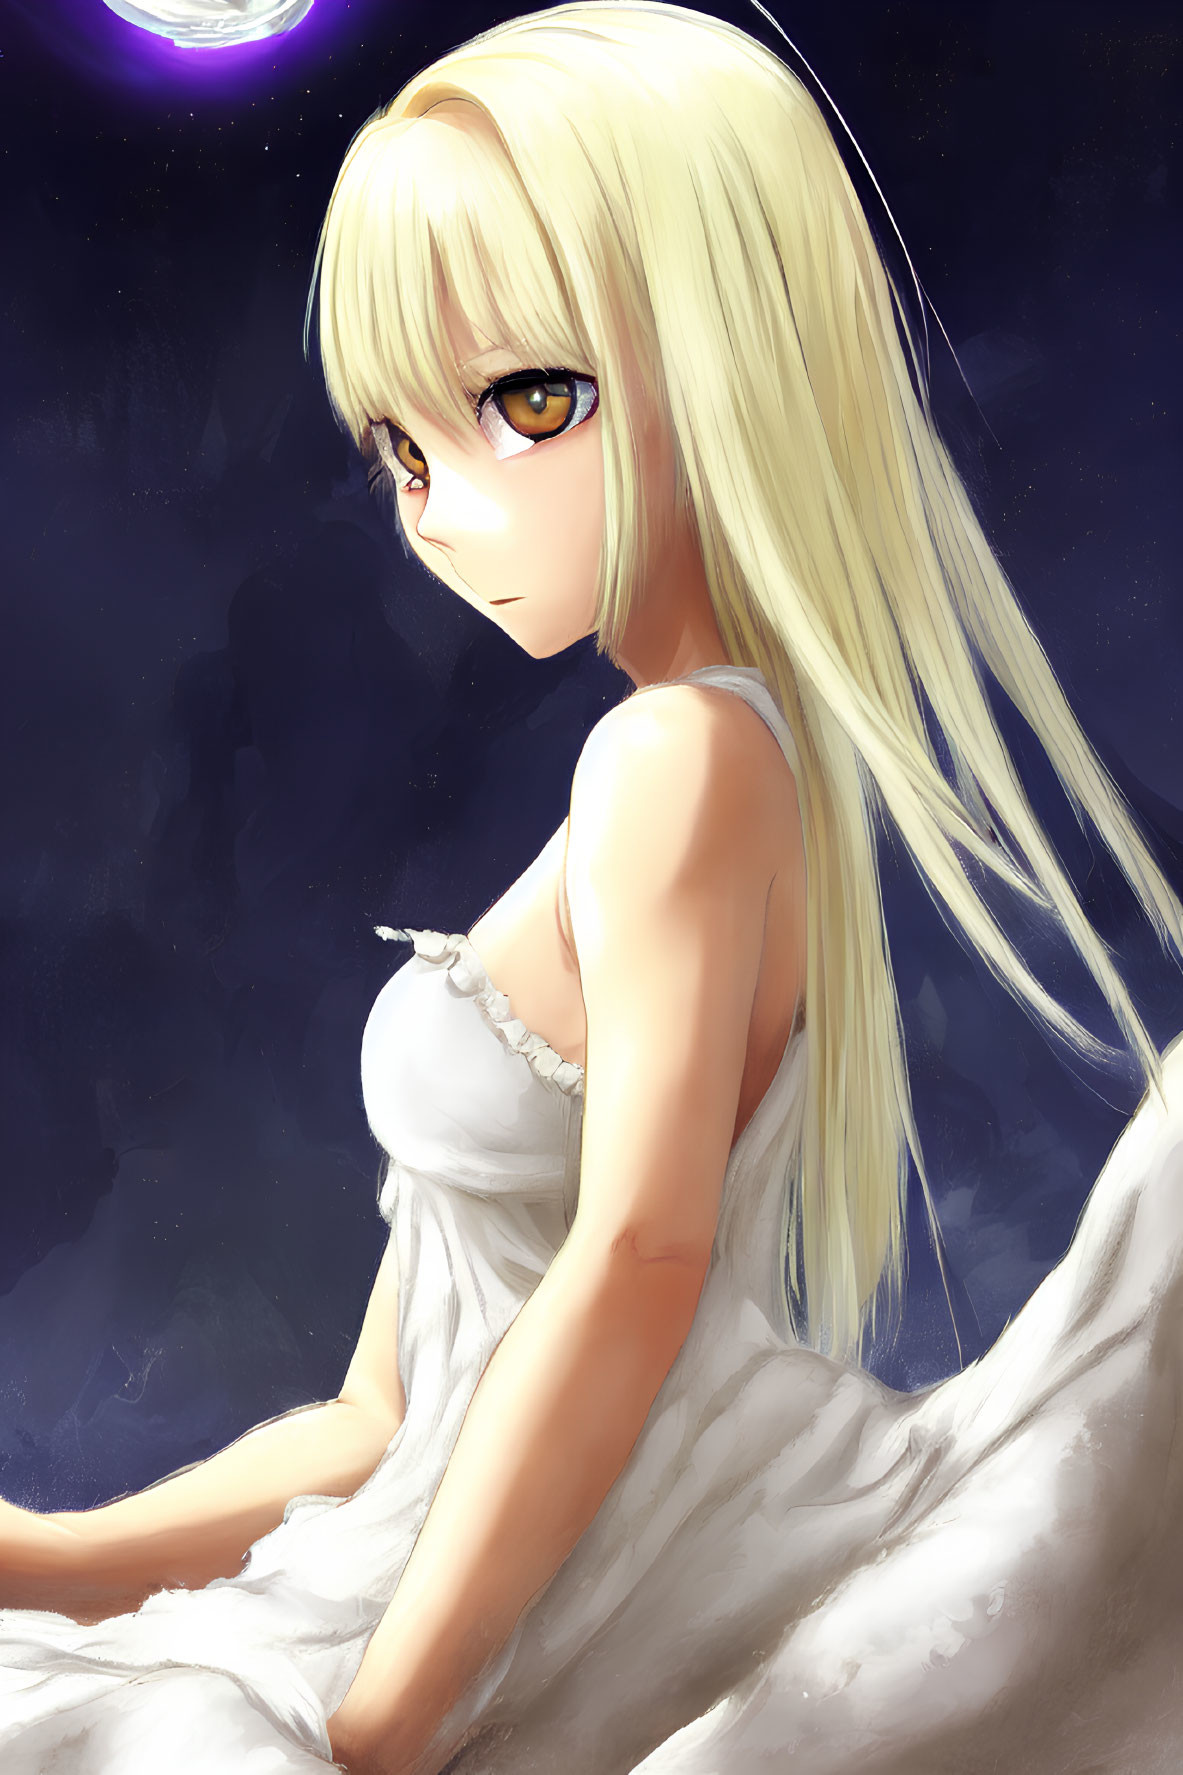 Blonde anime girl in white dress under crescent moon